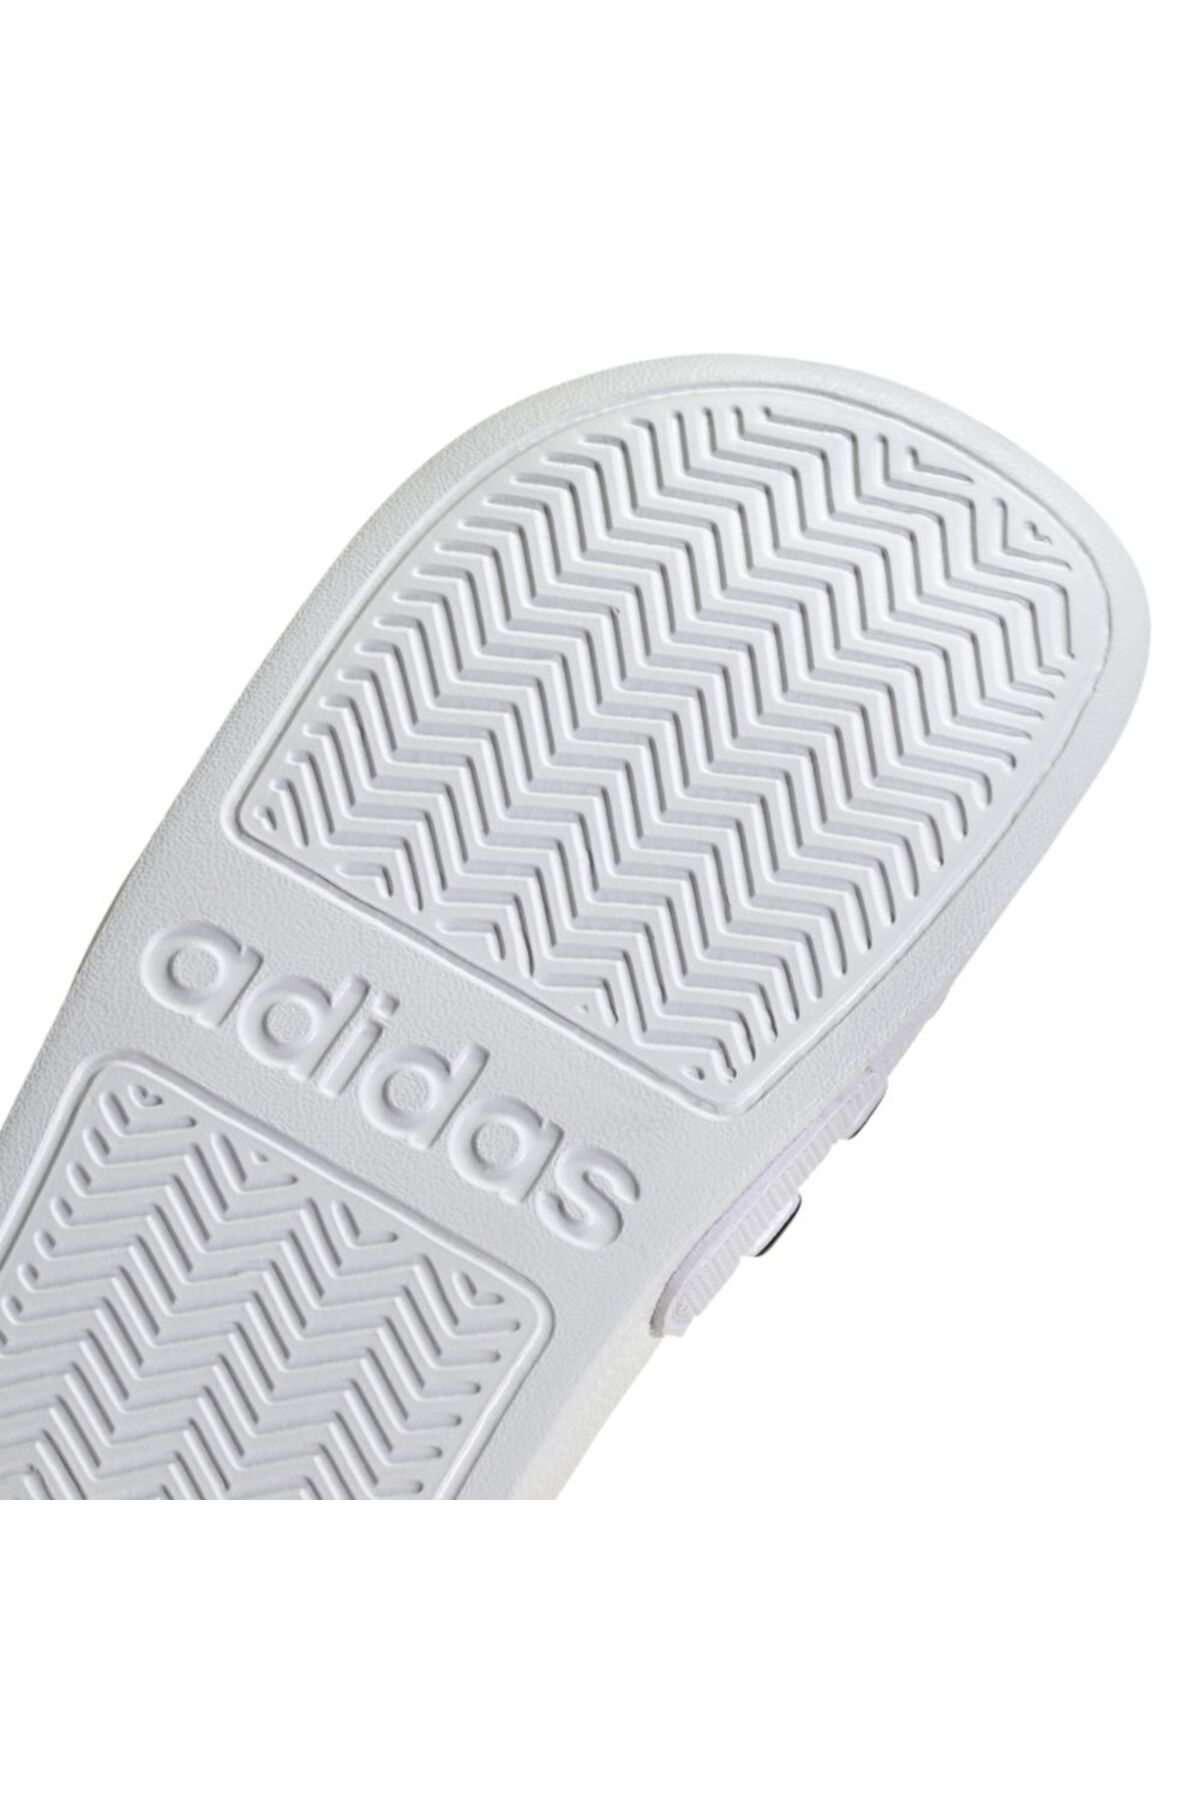 adidas دمپایی آدیداس